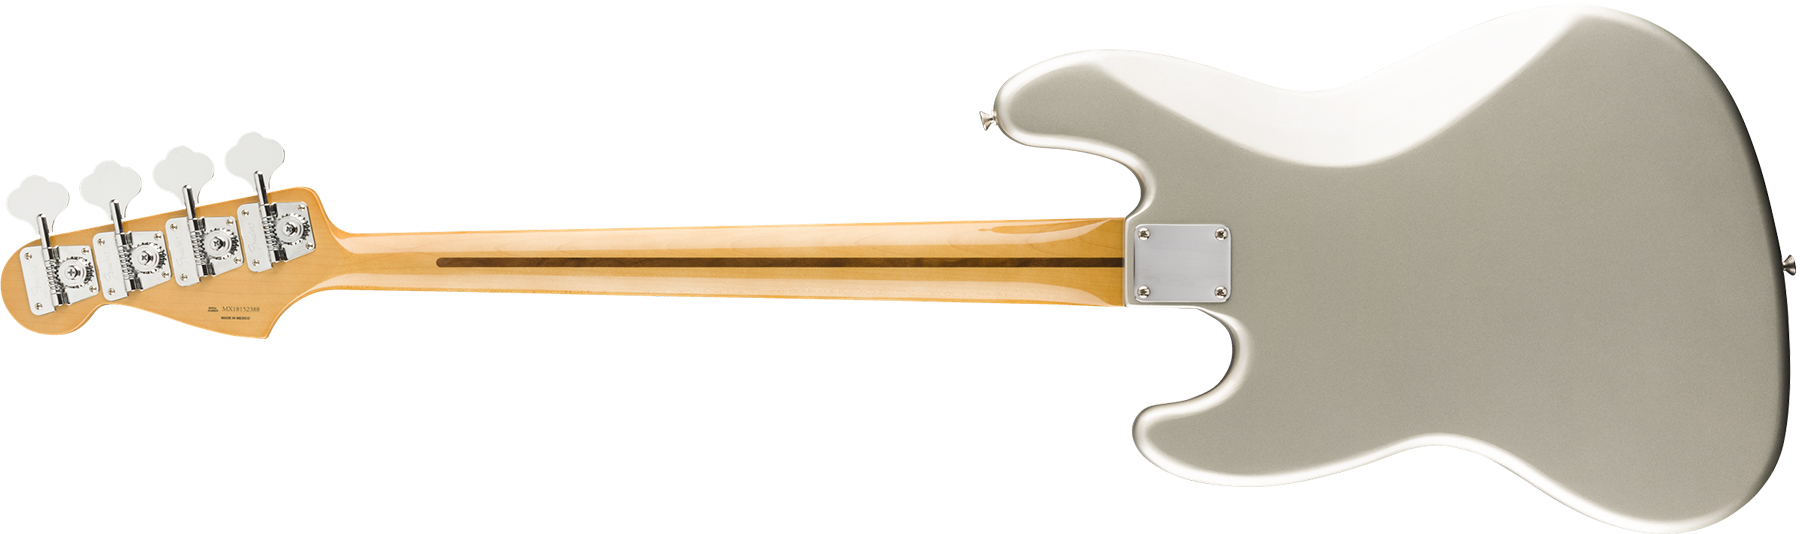 Fender Jazz Bass 70s Vintera Vintage Mex Pf - Inca Silver - Basse Électrique Solid Body - Variation 1